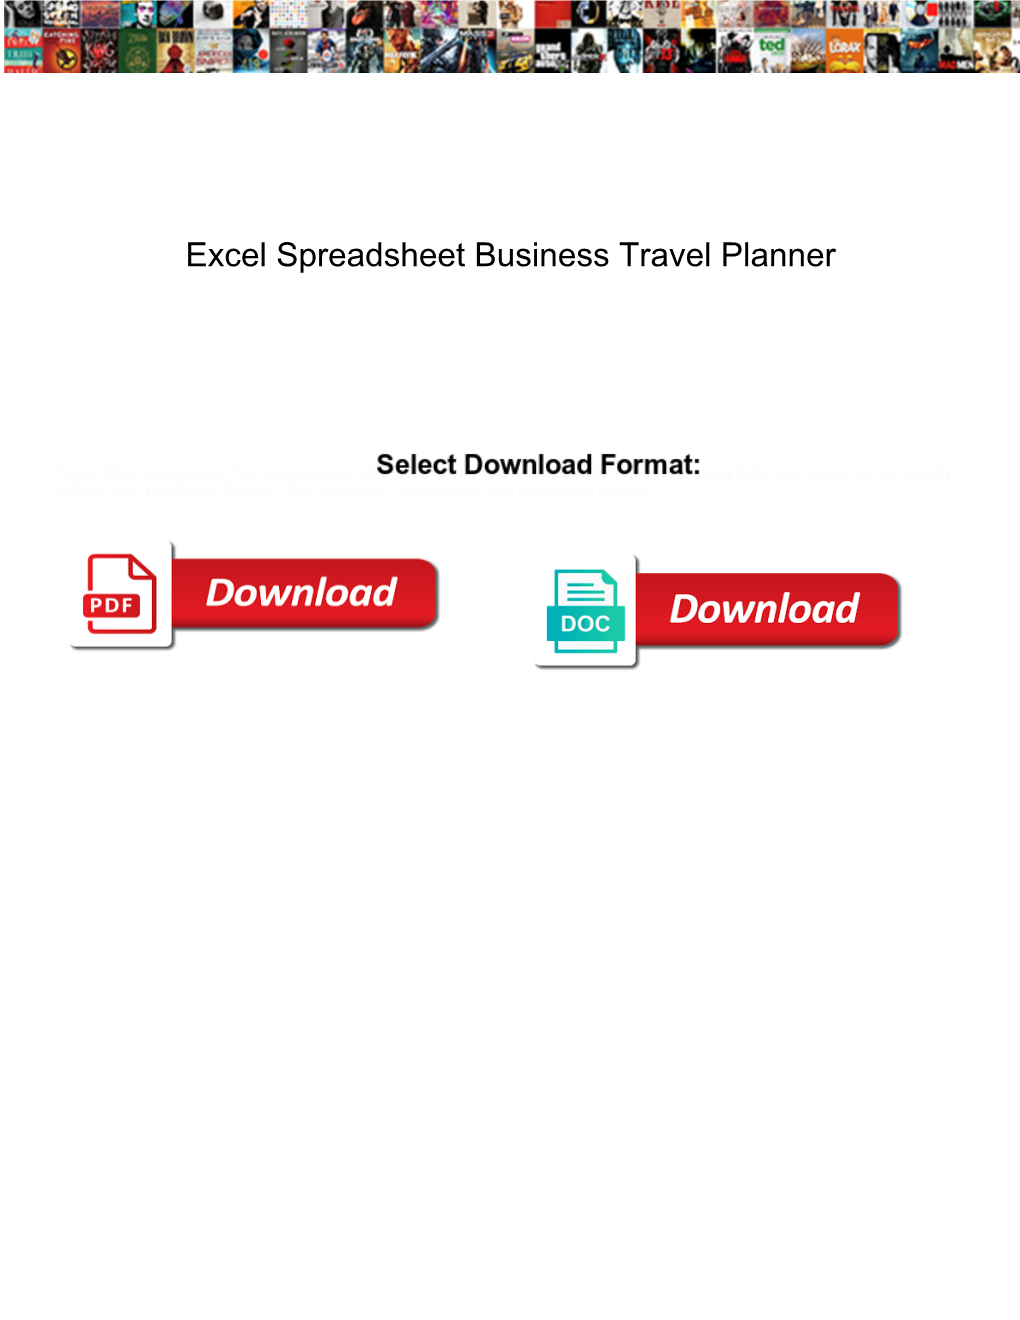 Excel Spreadsheet Business Travel Planner